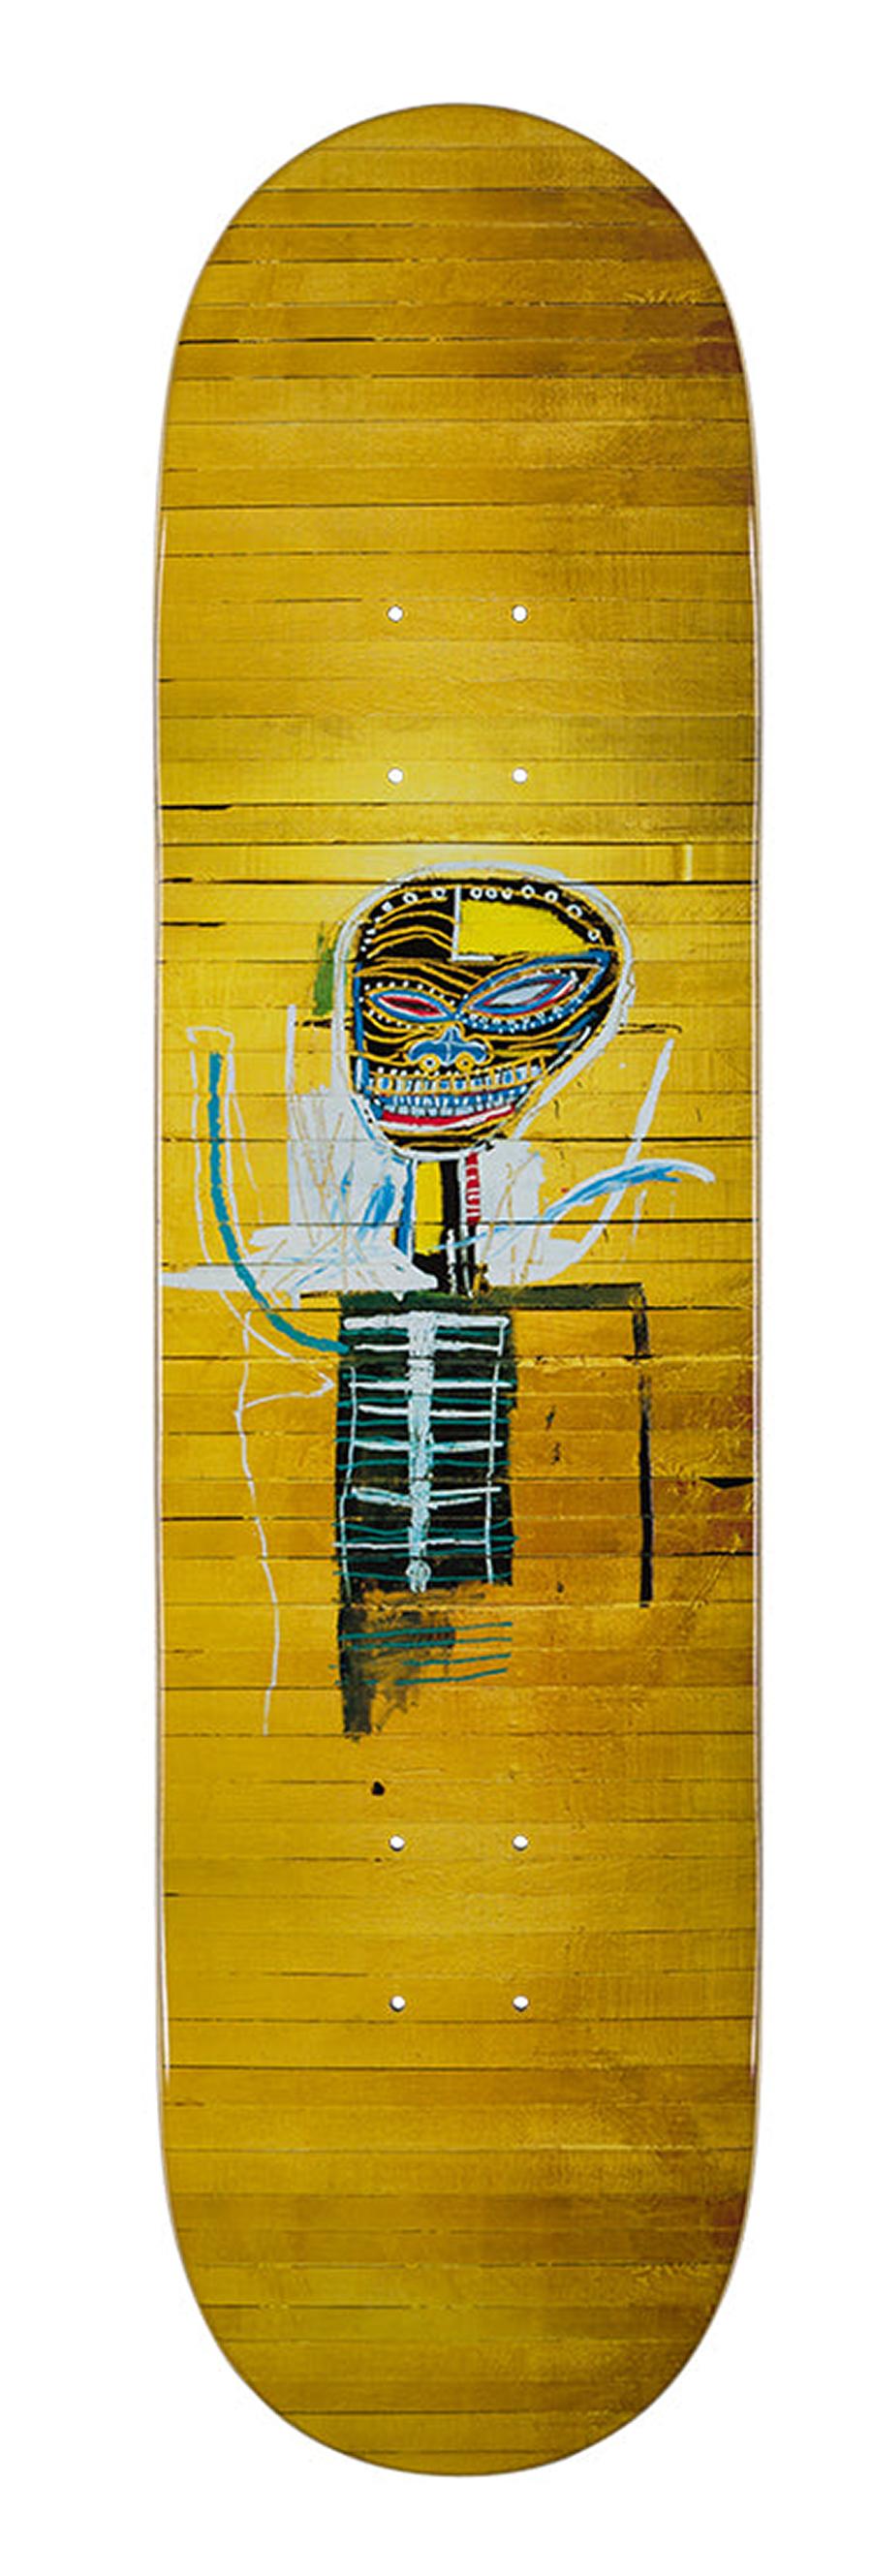 Basquiat Gold Griot Skateboard Deck (Basquiat skate) - Sculpture by after Jean-Michel Basquiat